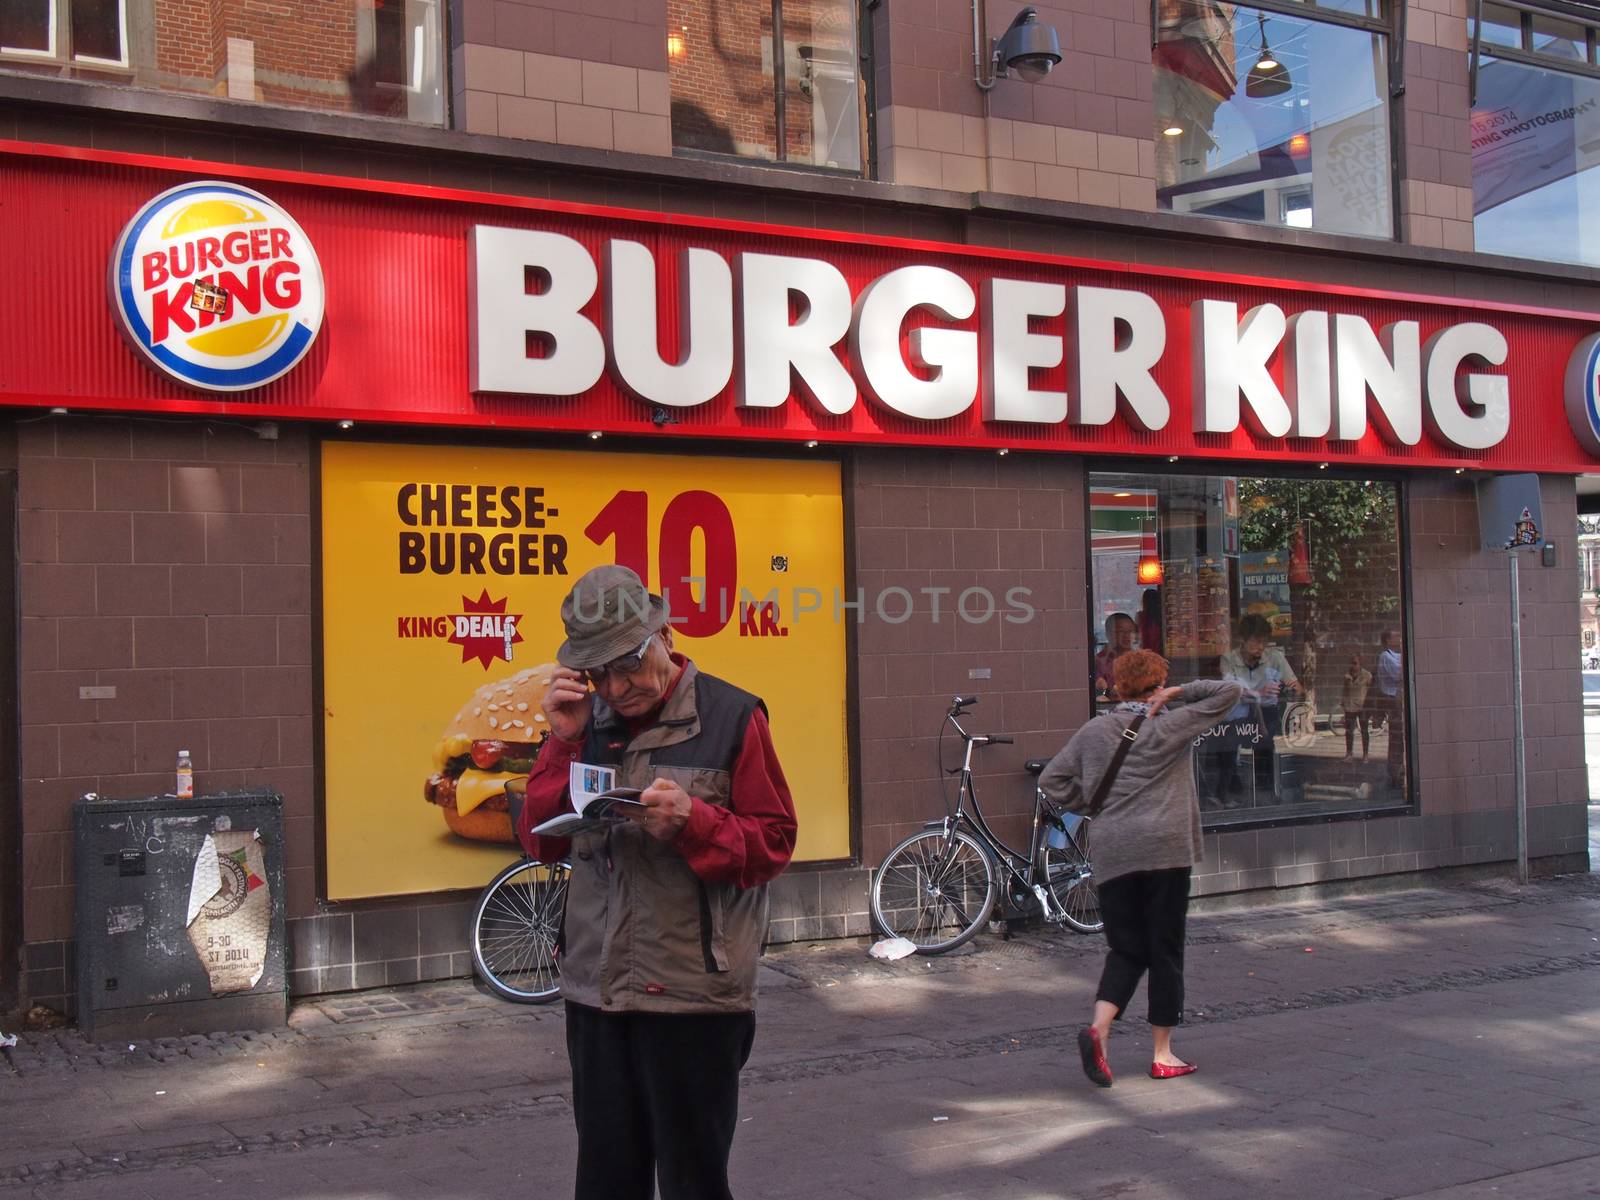 burger king shop copenhagen by Ric510